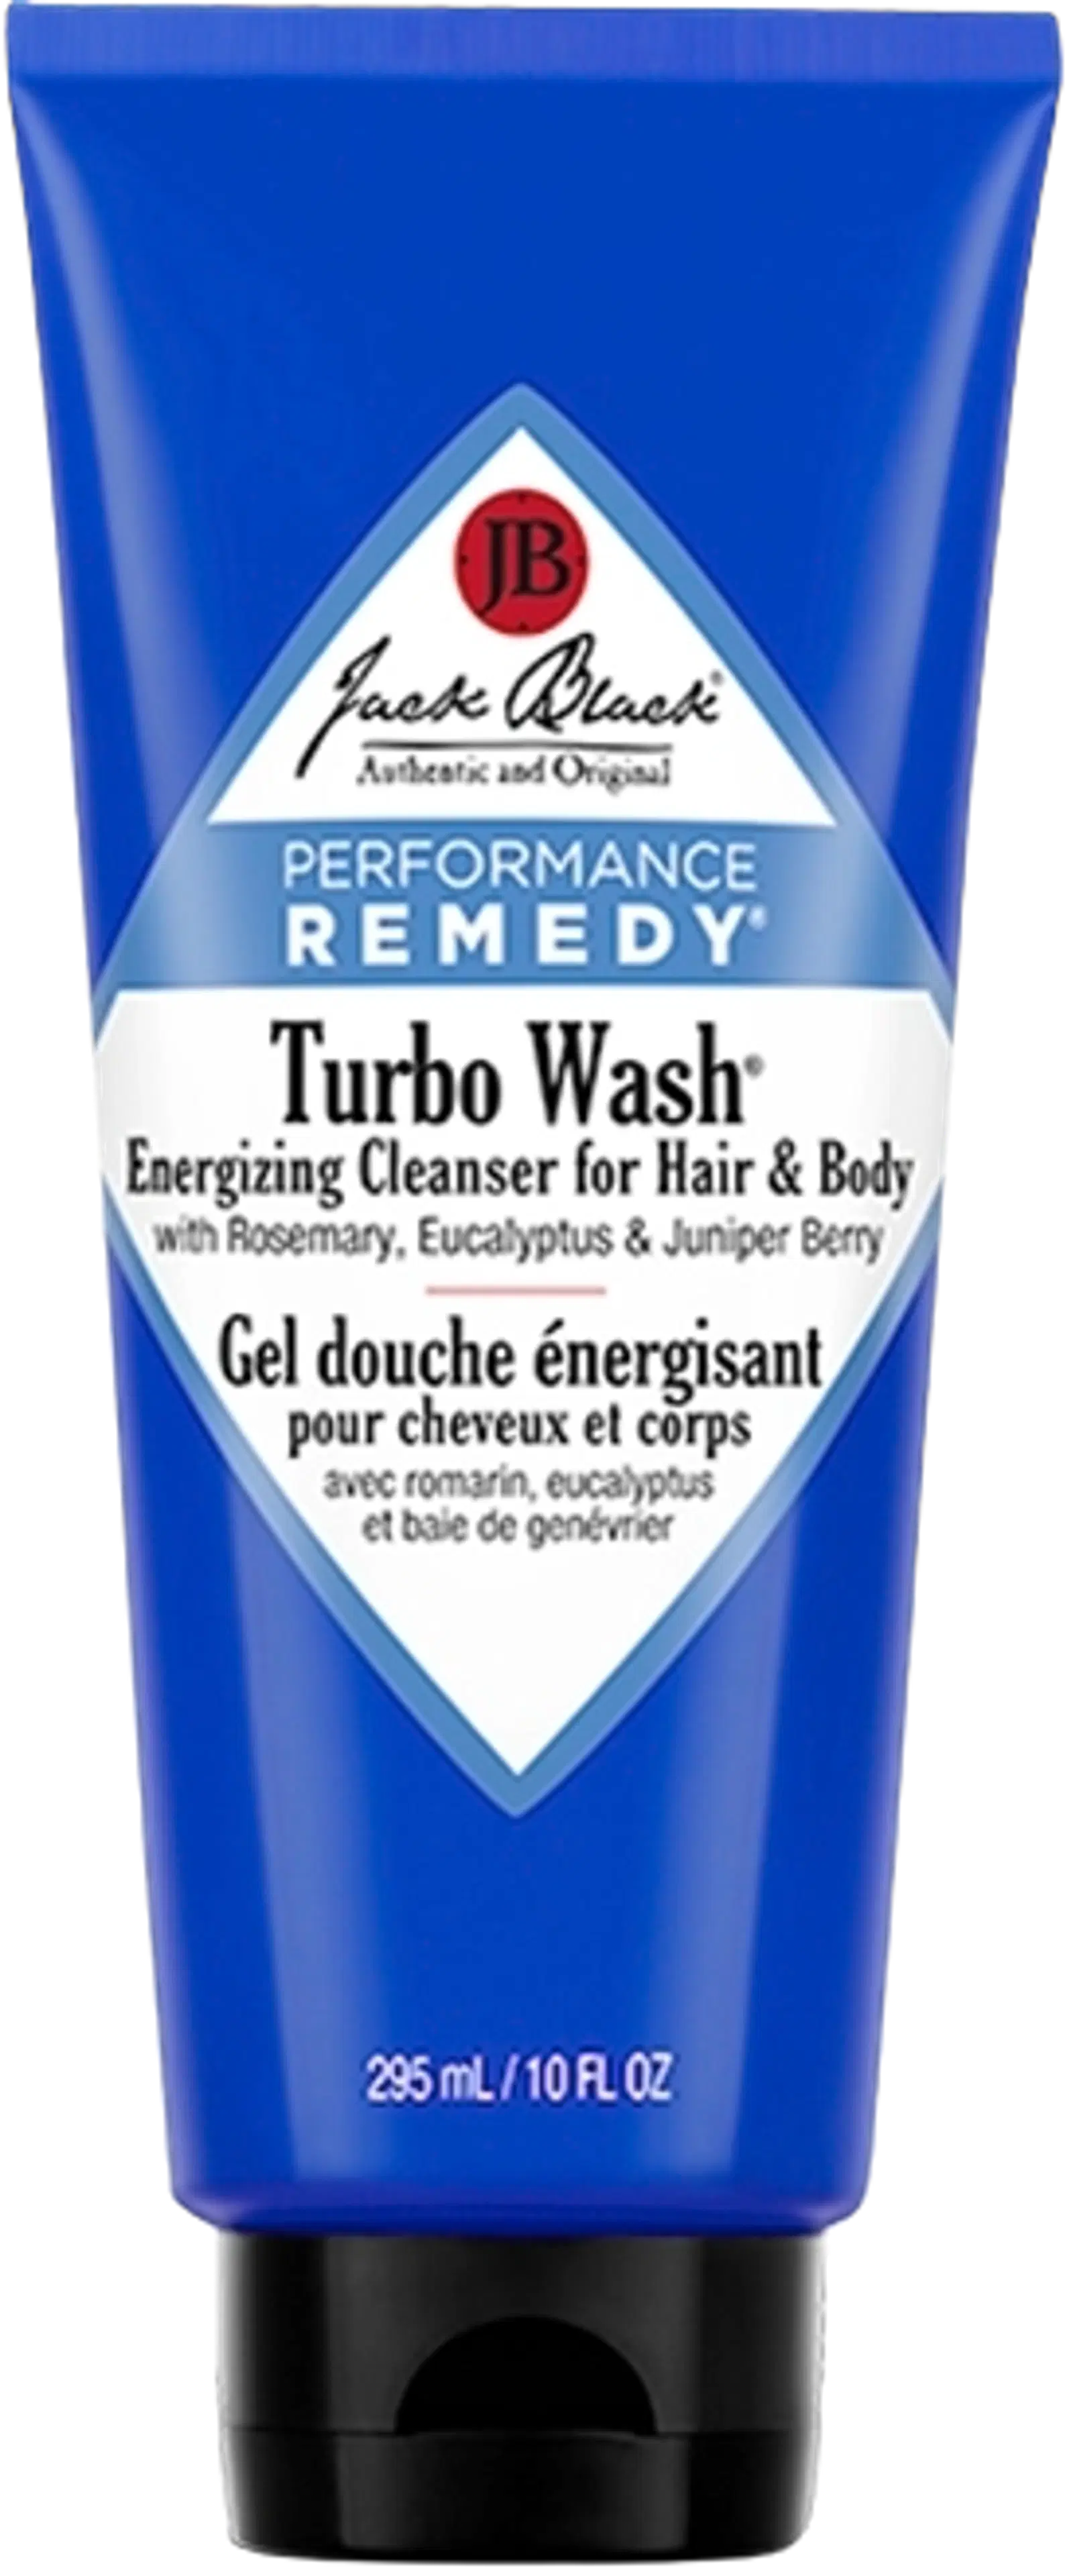 Jack Black Turbo Wash Energizing Cleanser suihkugeeli 295 ml